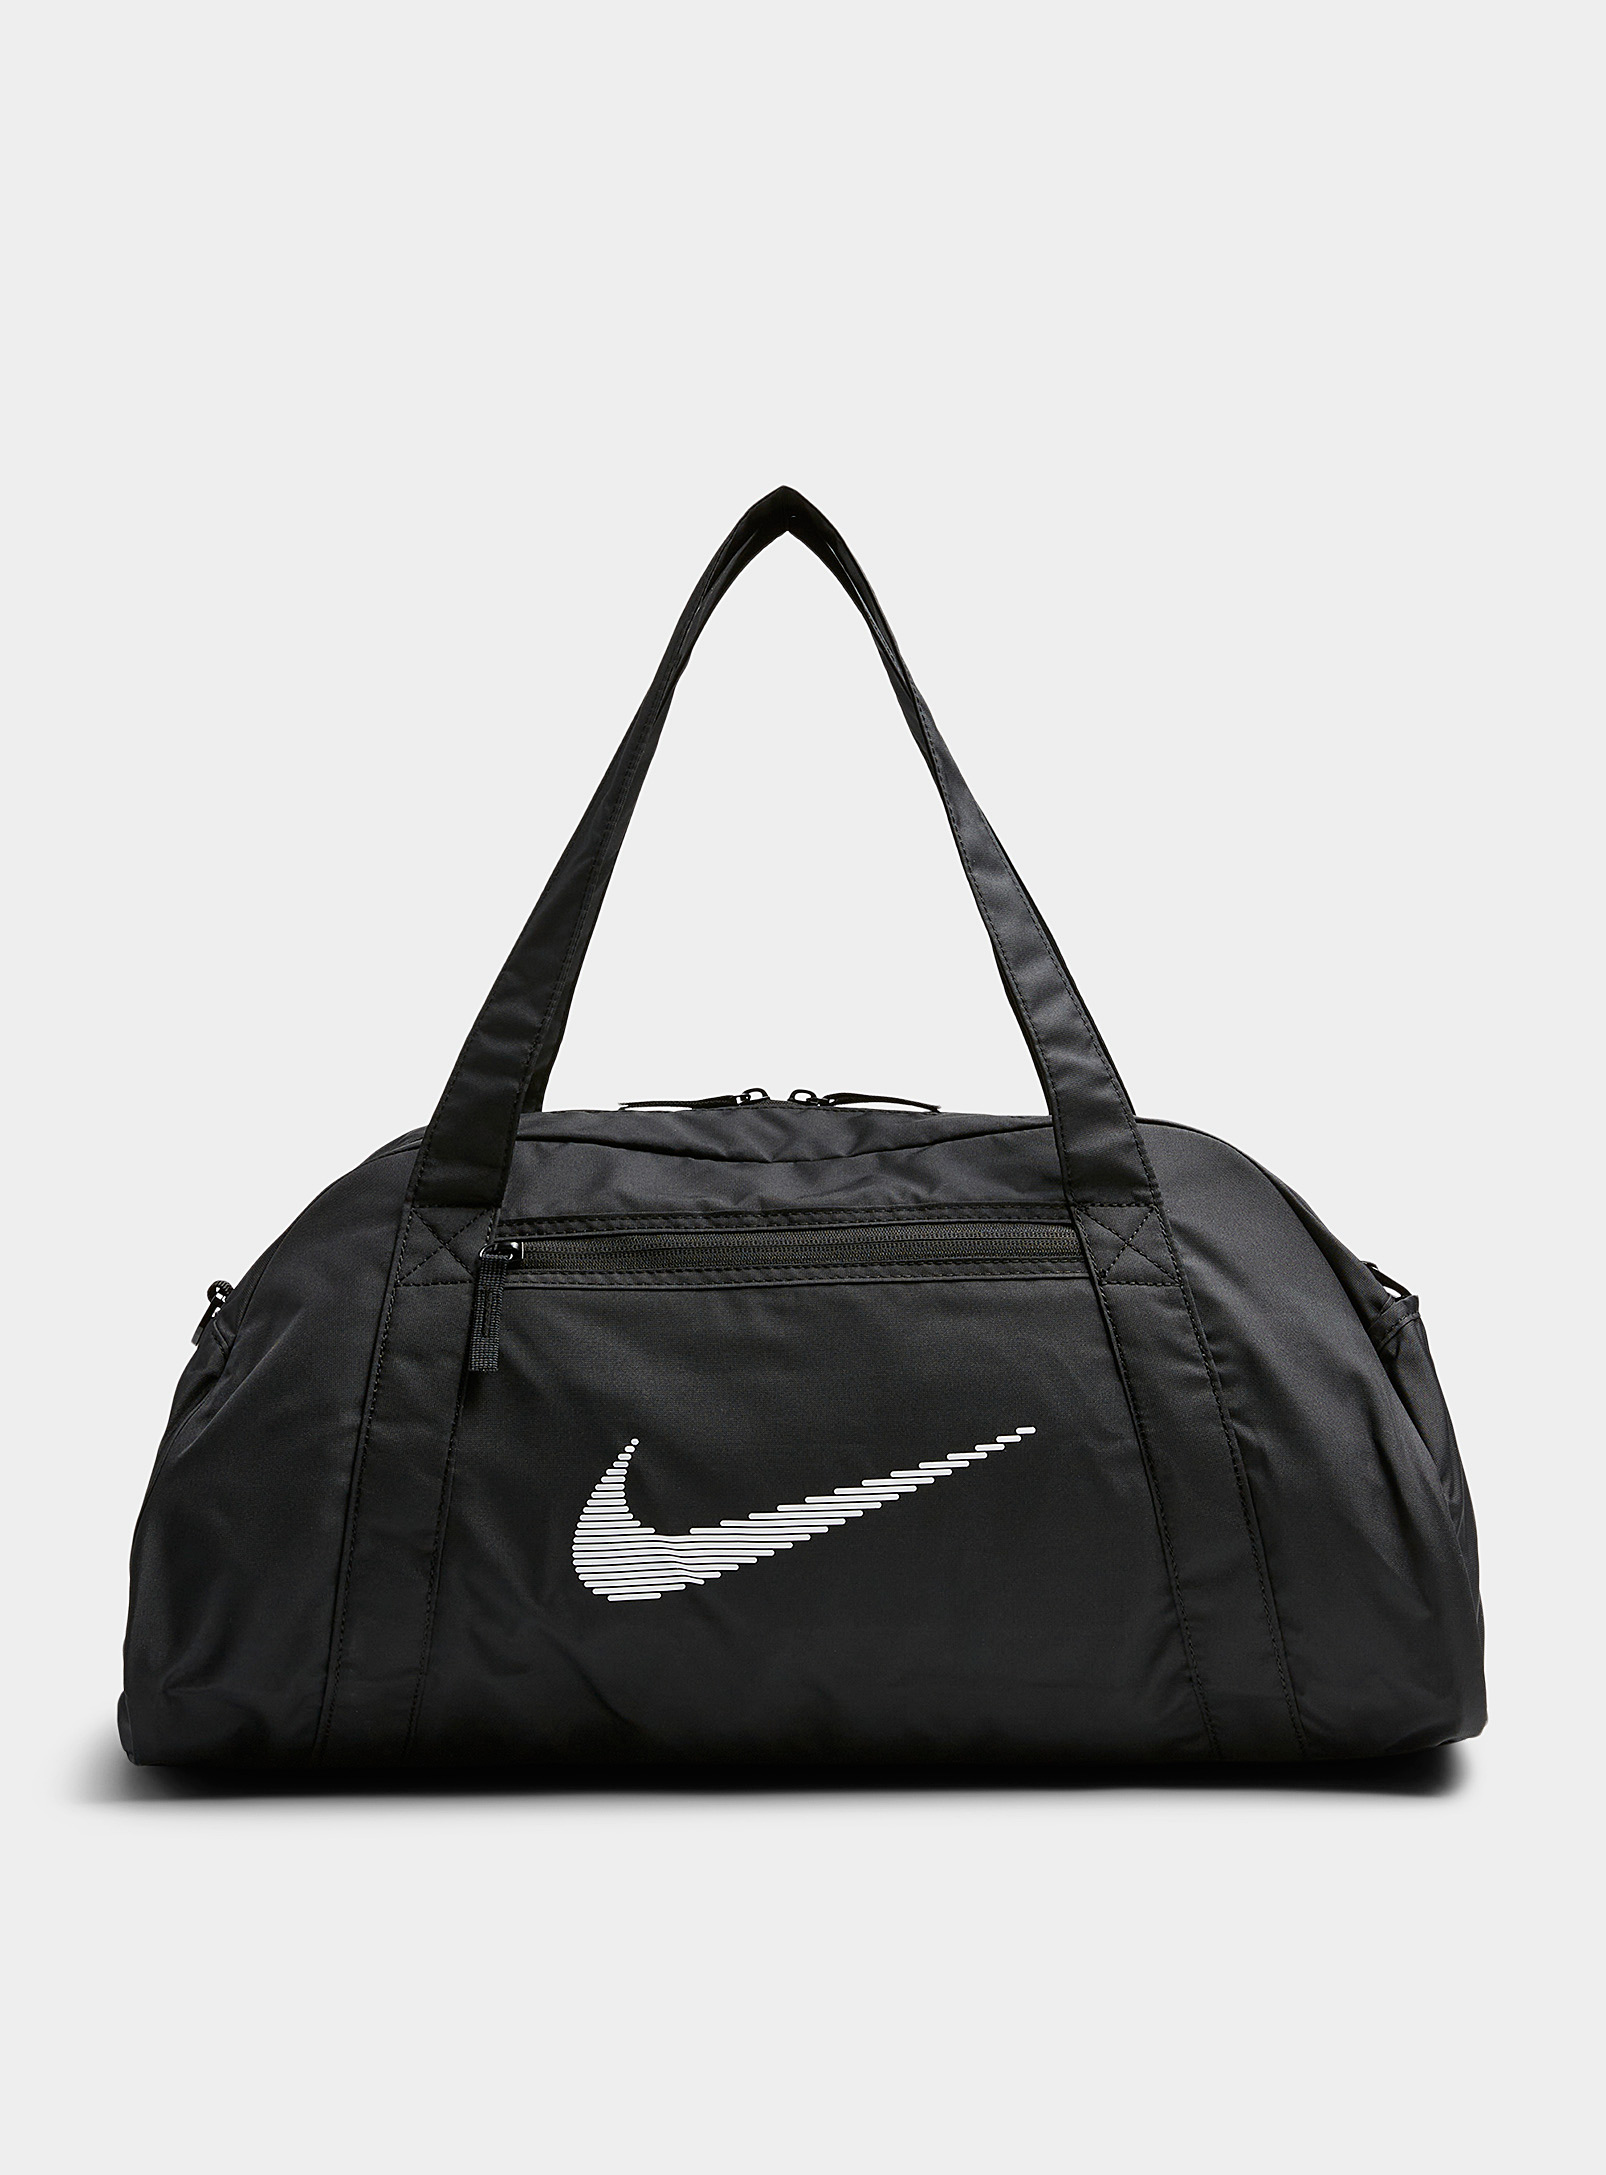 Nike - Women's Gym Club half-moon duffle bag